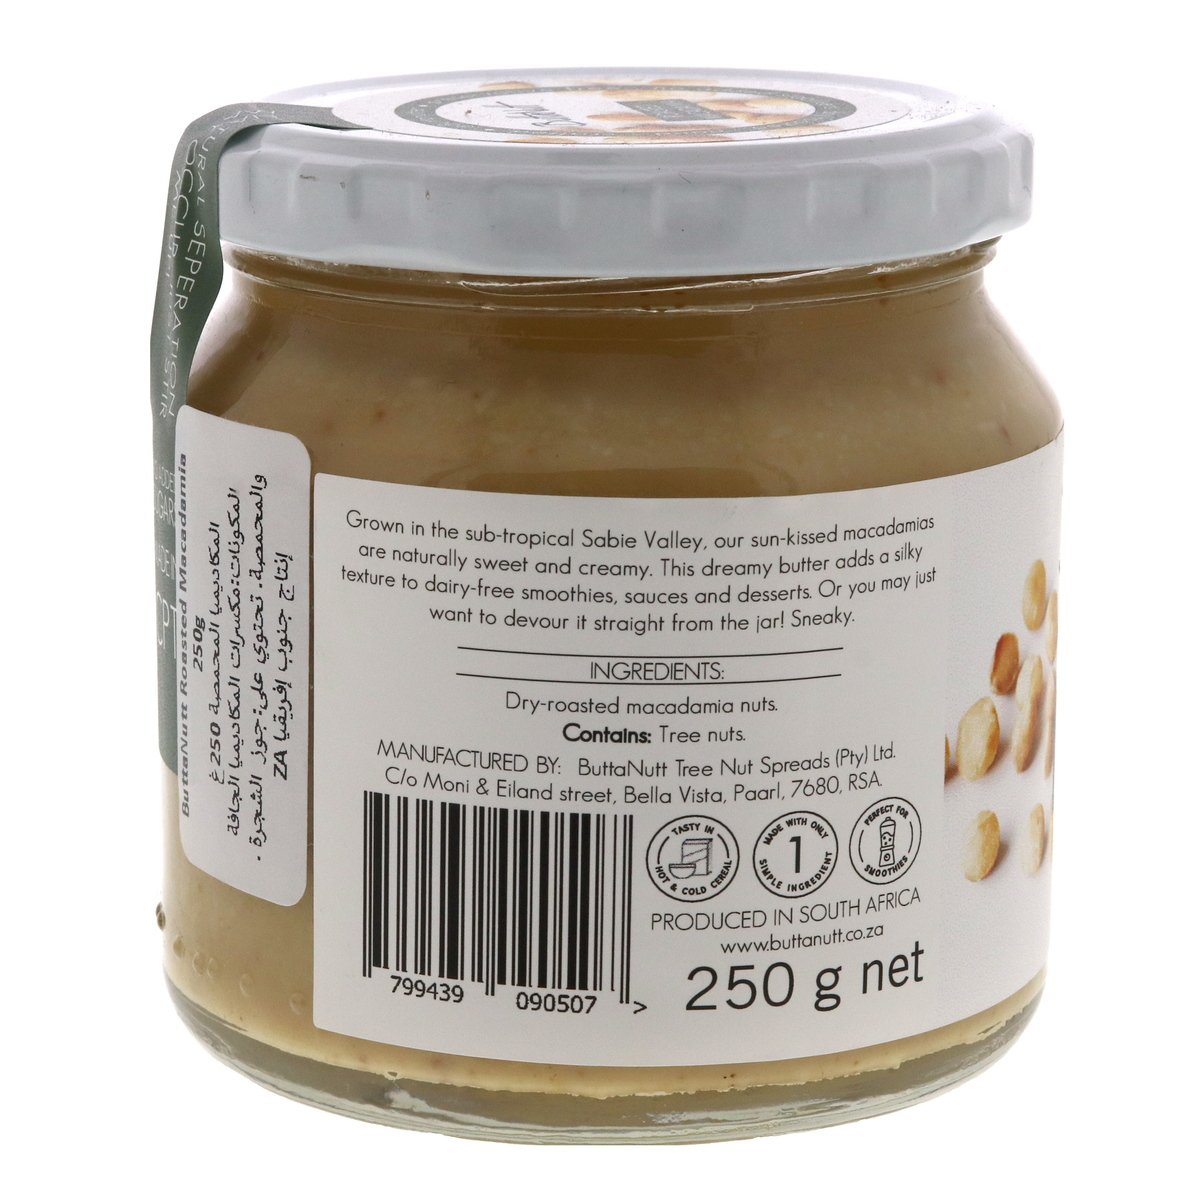 Butta Nutt Roasted Macadamia Nut Butter 250 g